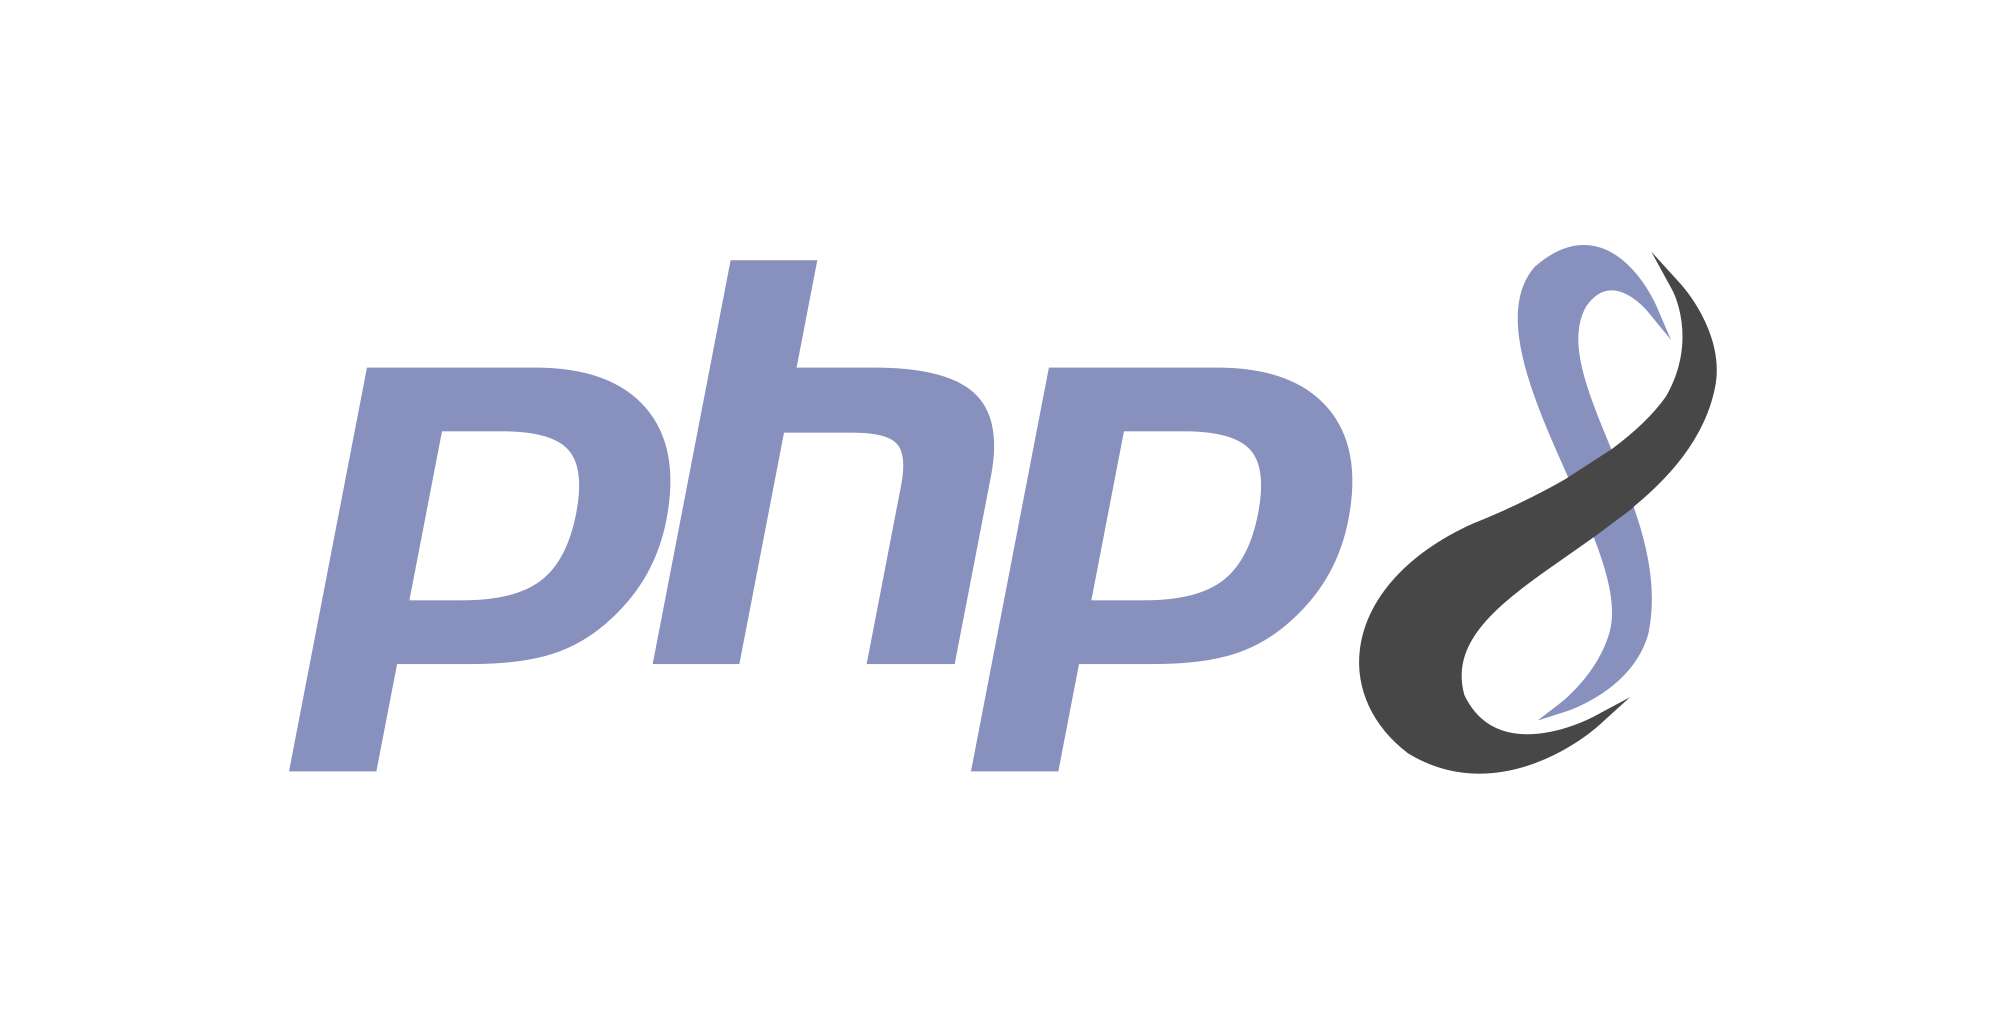 php8-logo.jpg